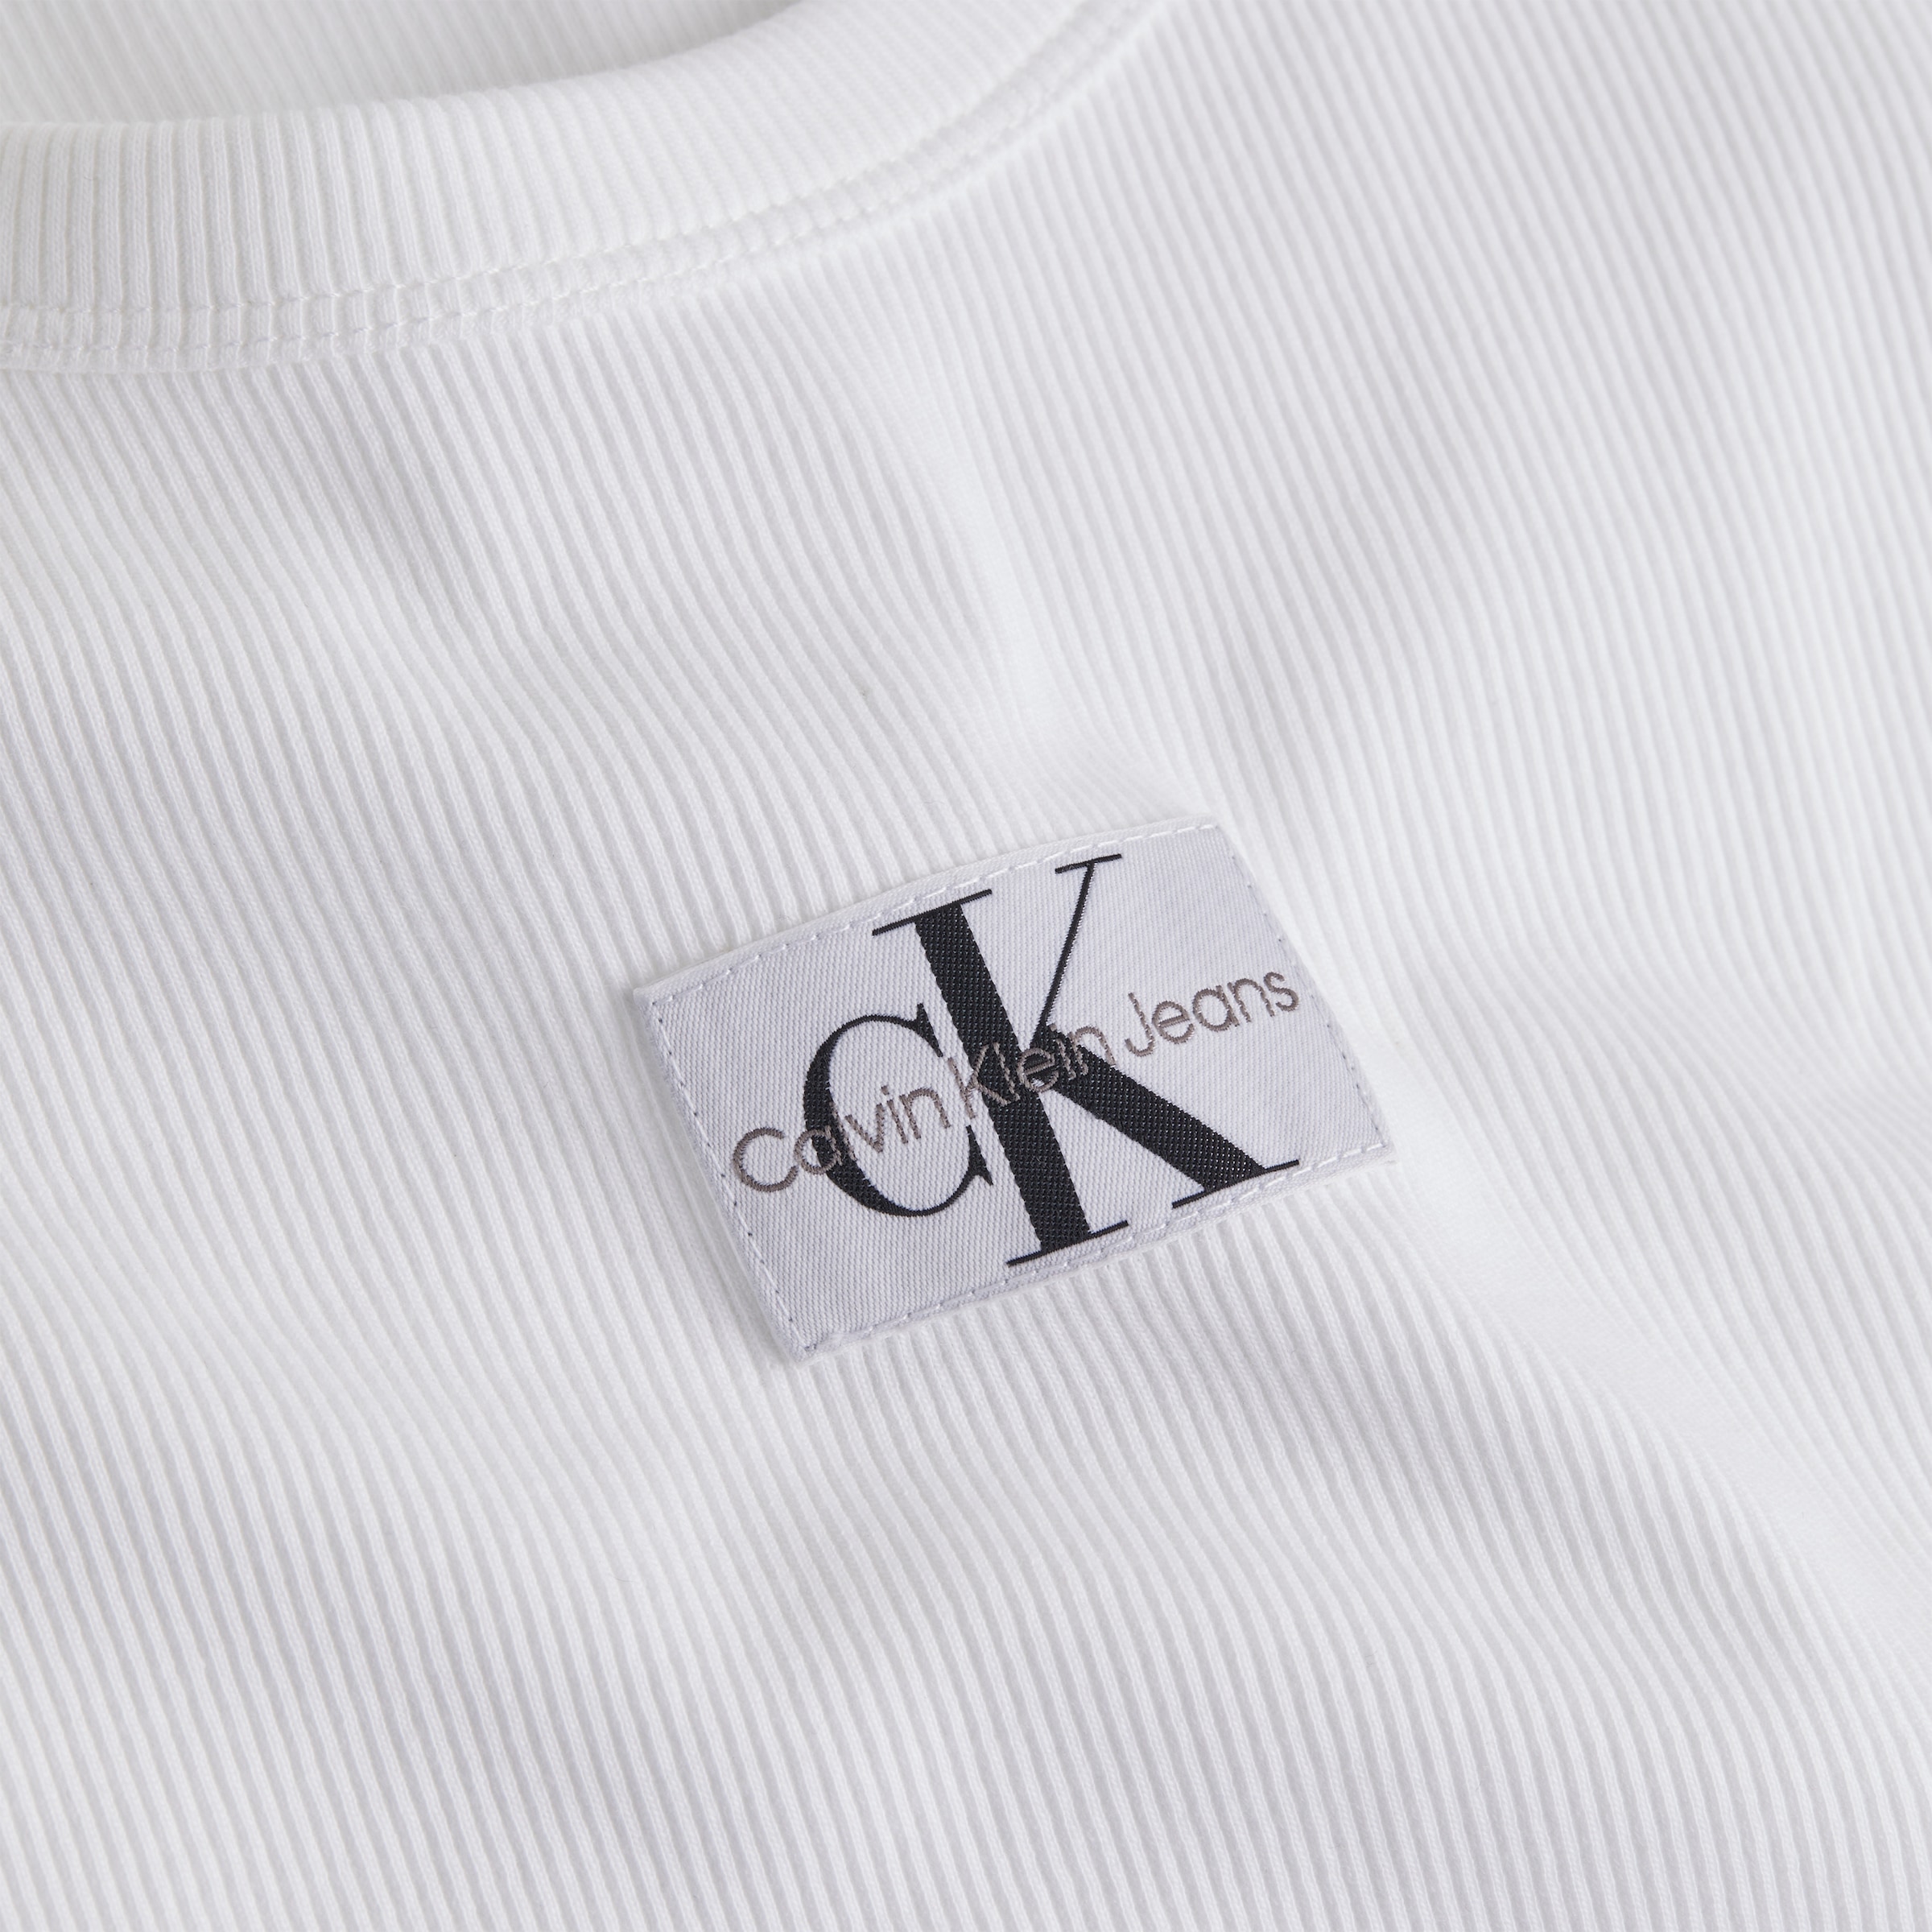 Calvin Klein Jeans Tanktop LABEL Logomarkenlabel RIB kaufen bei »WOVEN mit OTTO TANK TOP«